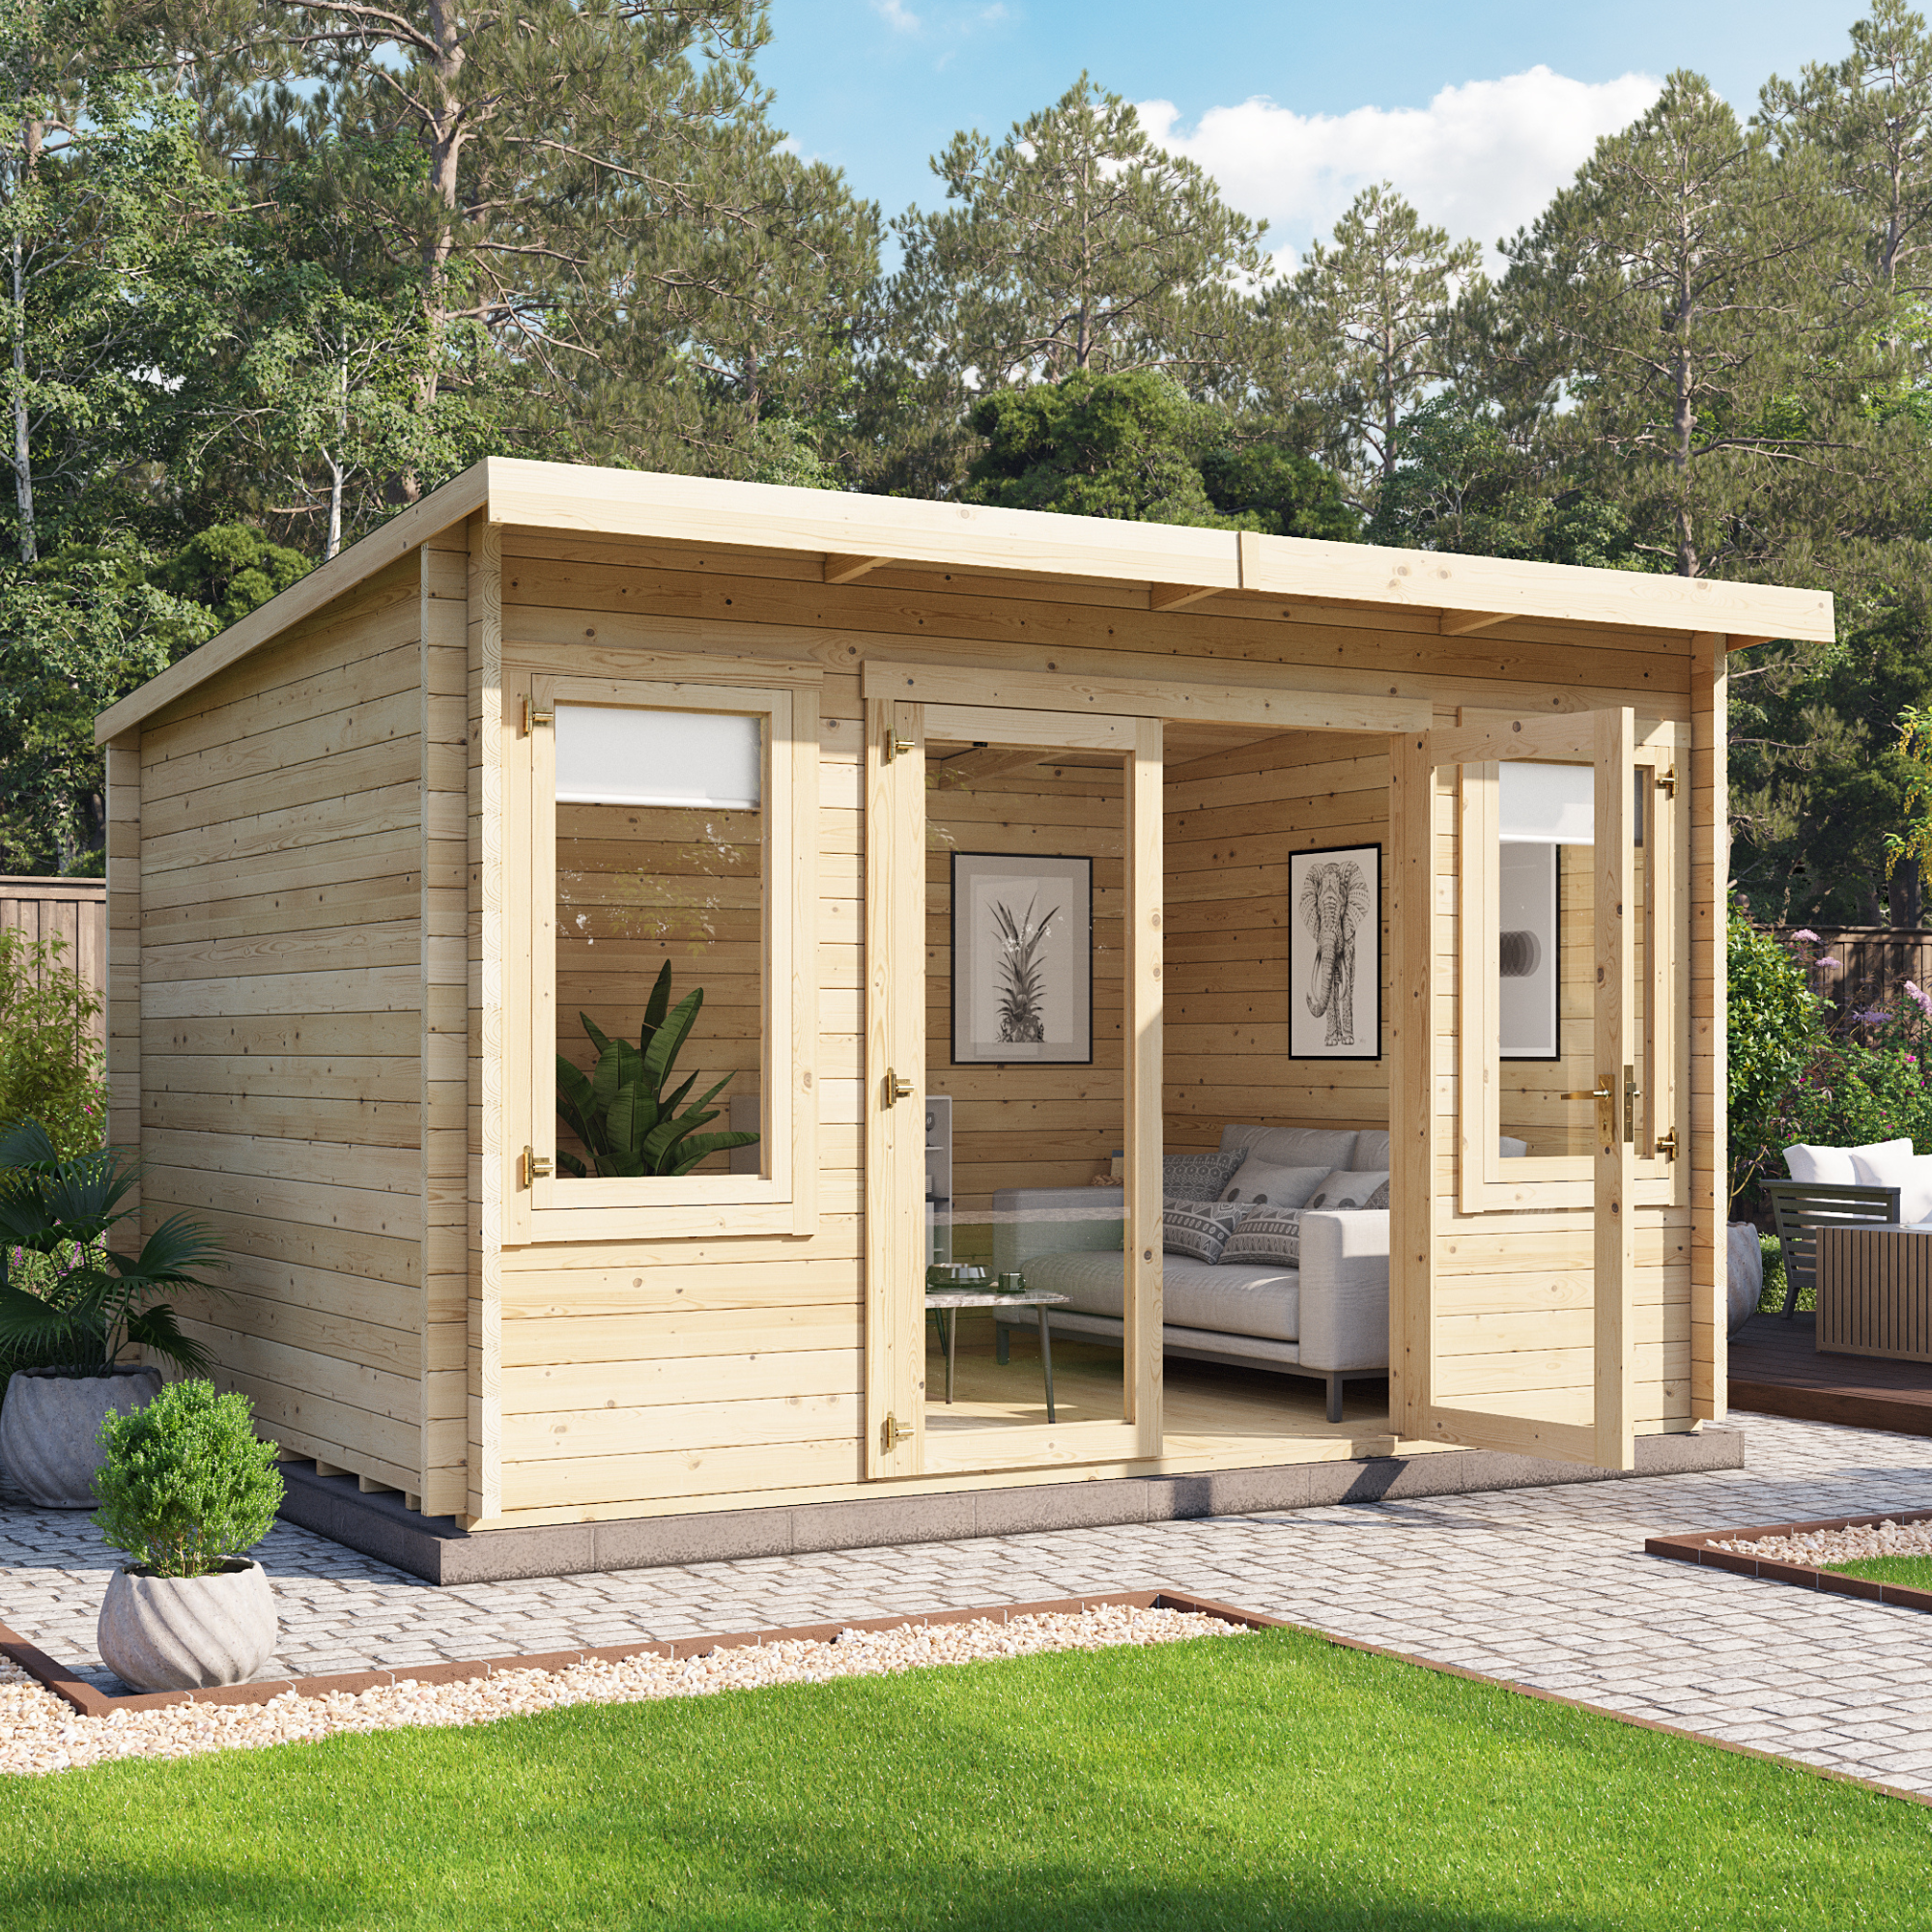 4 x 3 Log Cabin - BillyOh Fraya Pent Log Cabin Summer House - 44mm Thickness Wooden Log Cabin Summerhouse - 4m x 3m